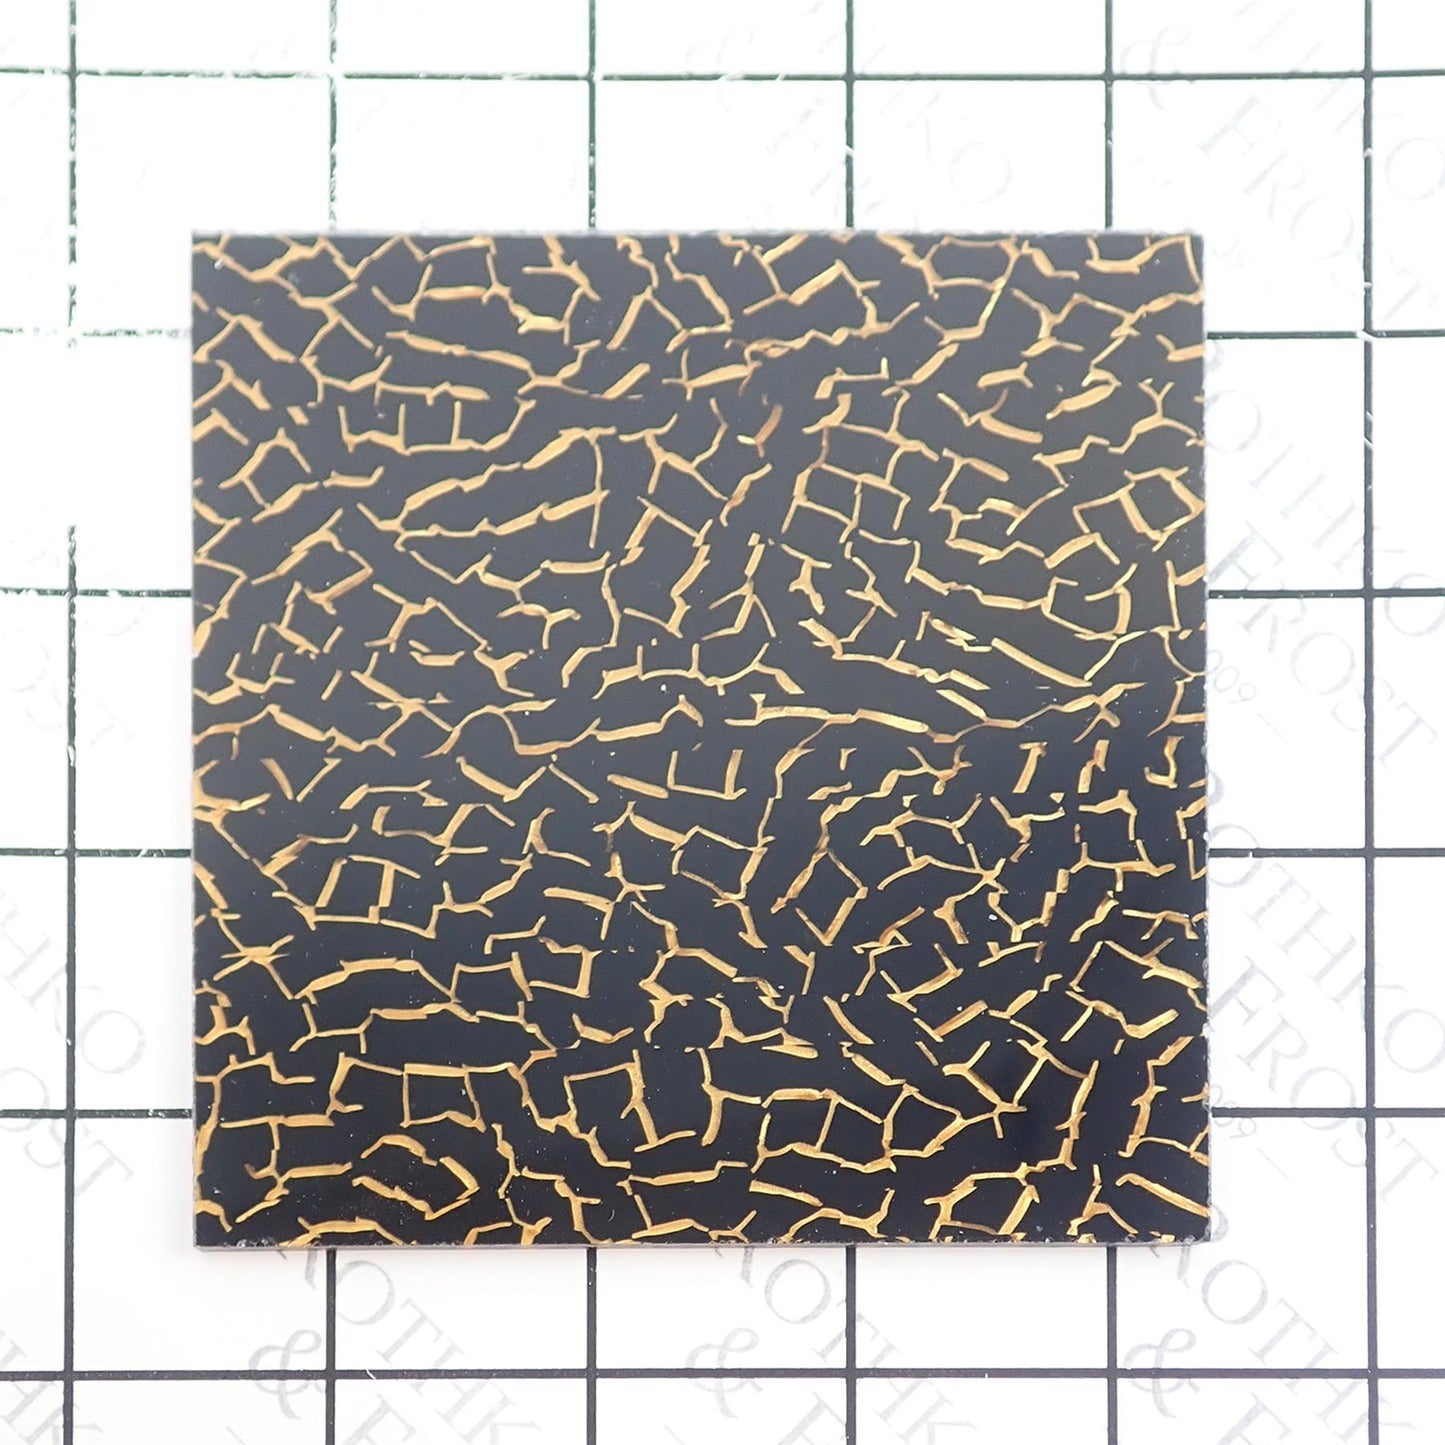 Incudo Black Crackle Celluloid Laminate Acrylic Sheet - 250x150x3mm